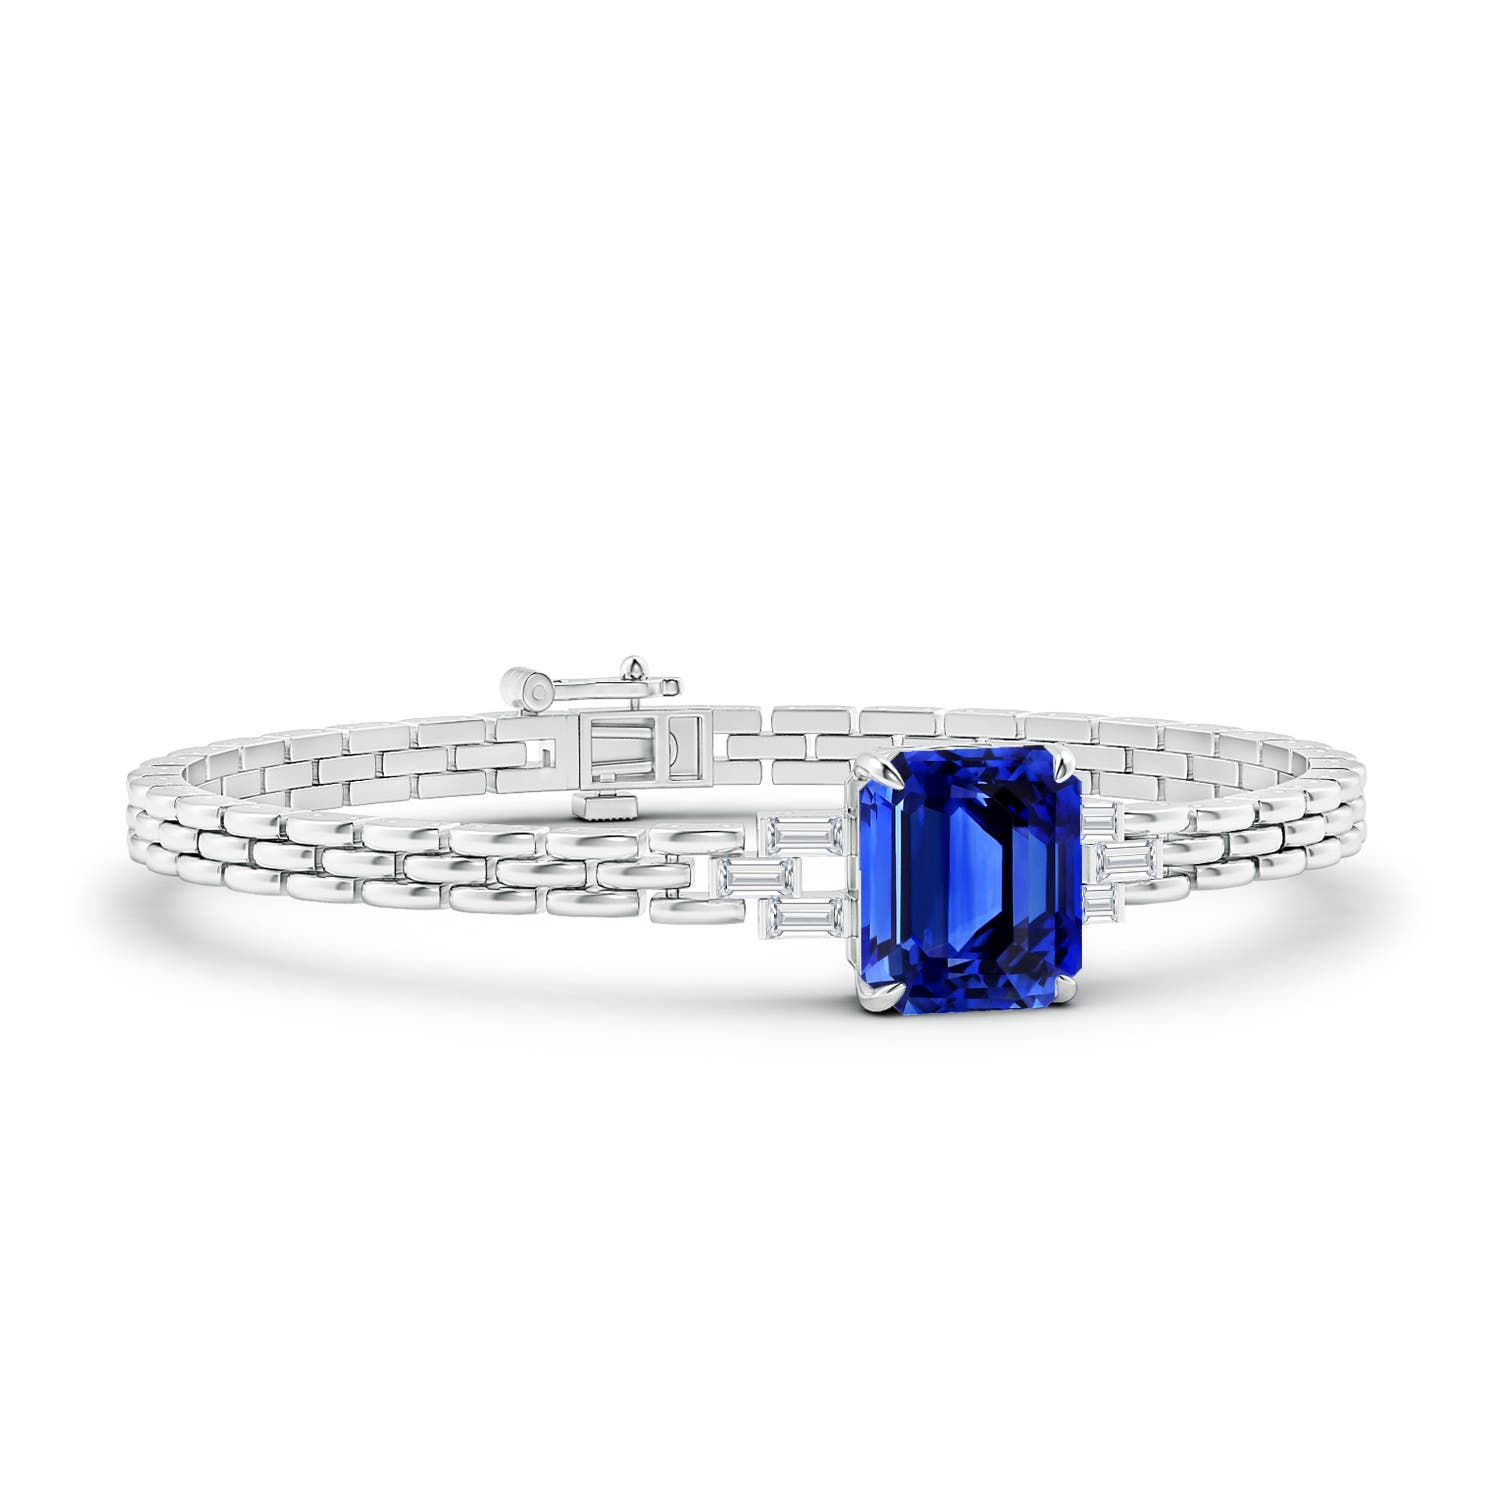 Gia certified octagonal blue sapphire rectangle link chain bracelet